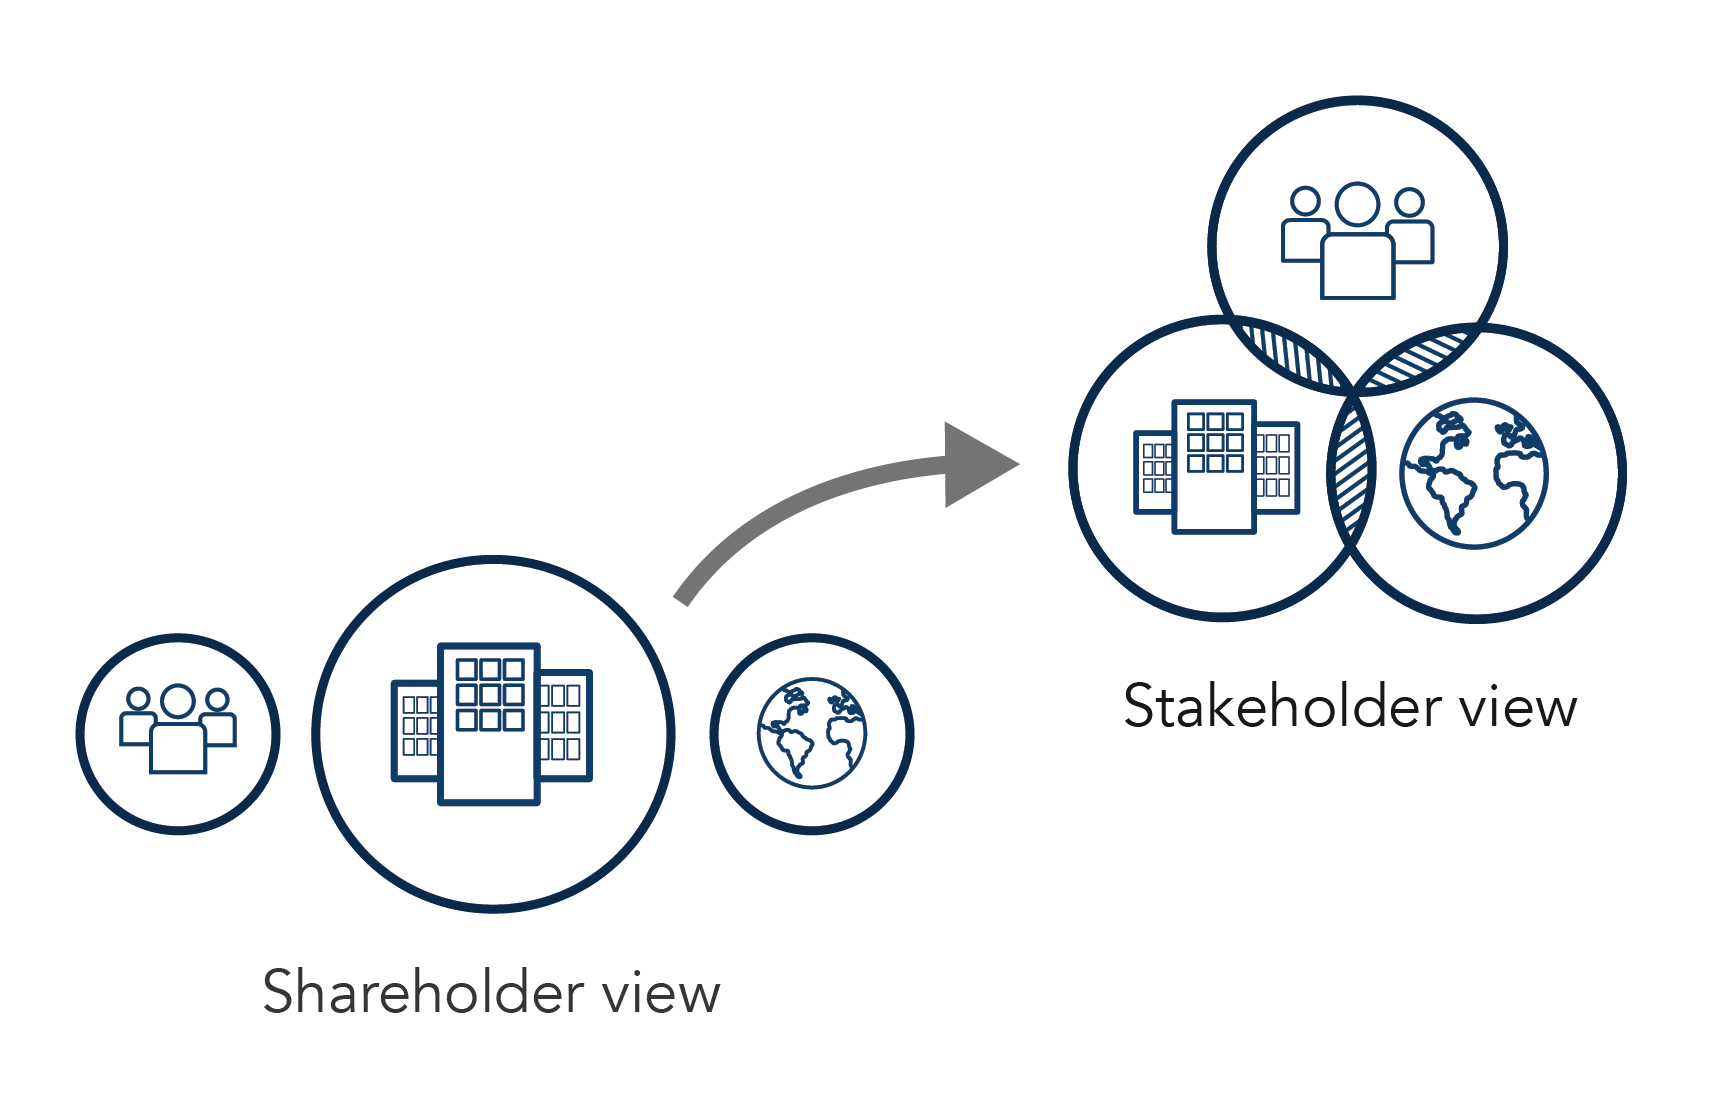 Shareholder to stakeholder view